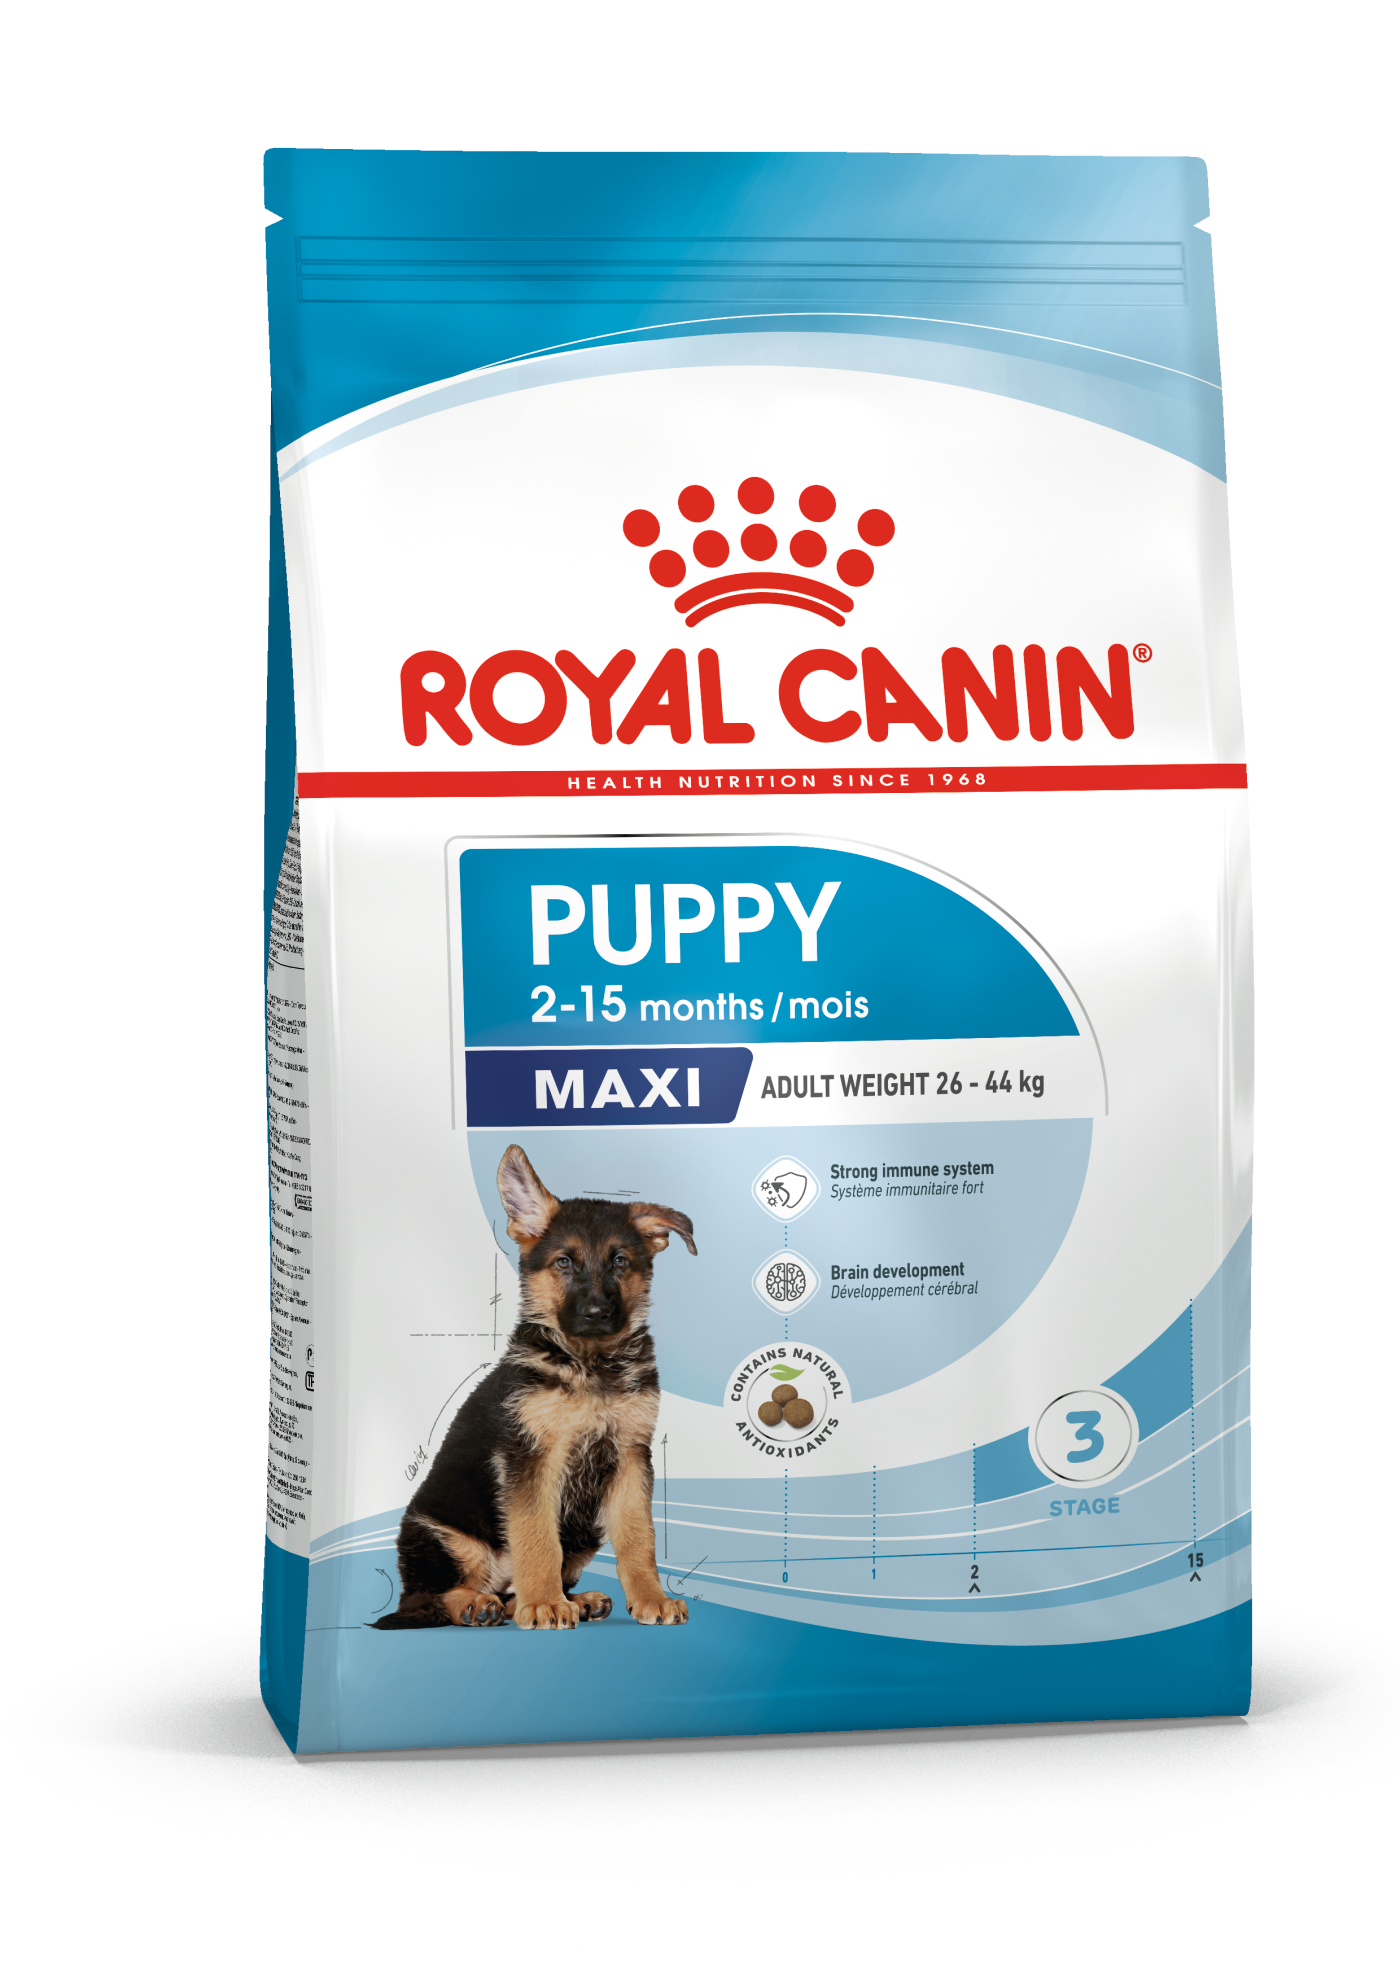 Royal Canin, Maxi Puppy, 4kg